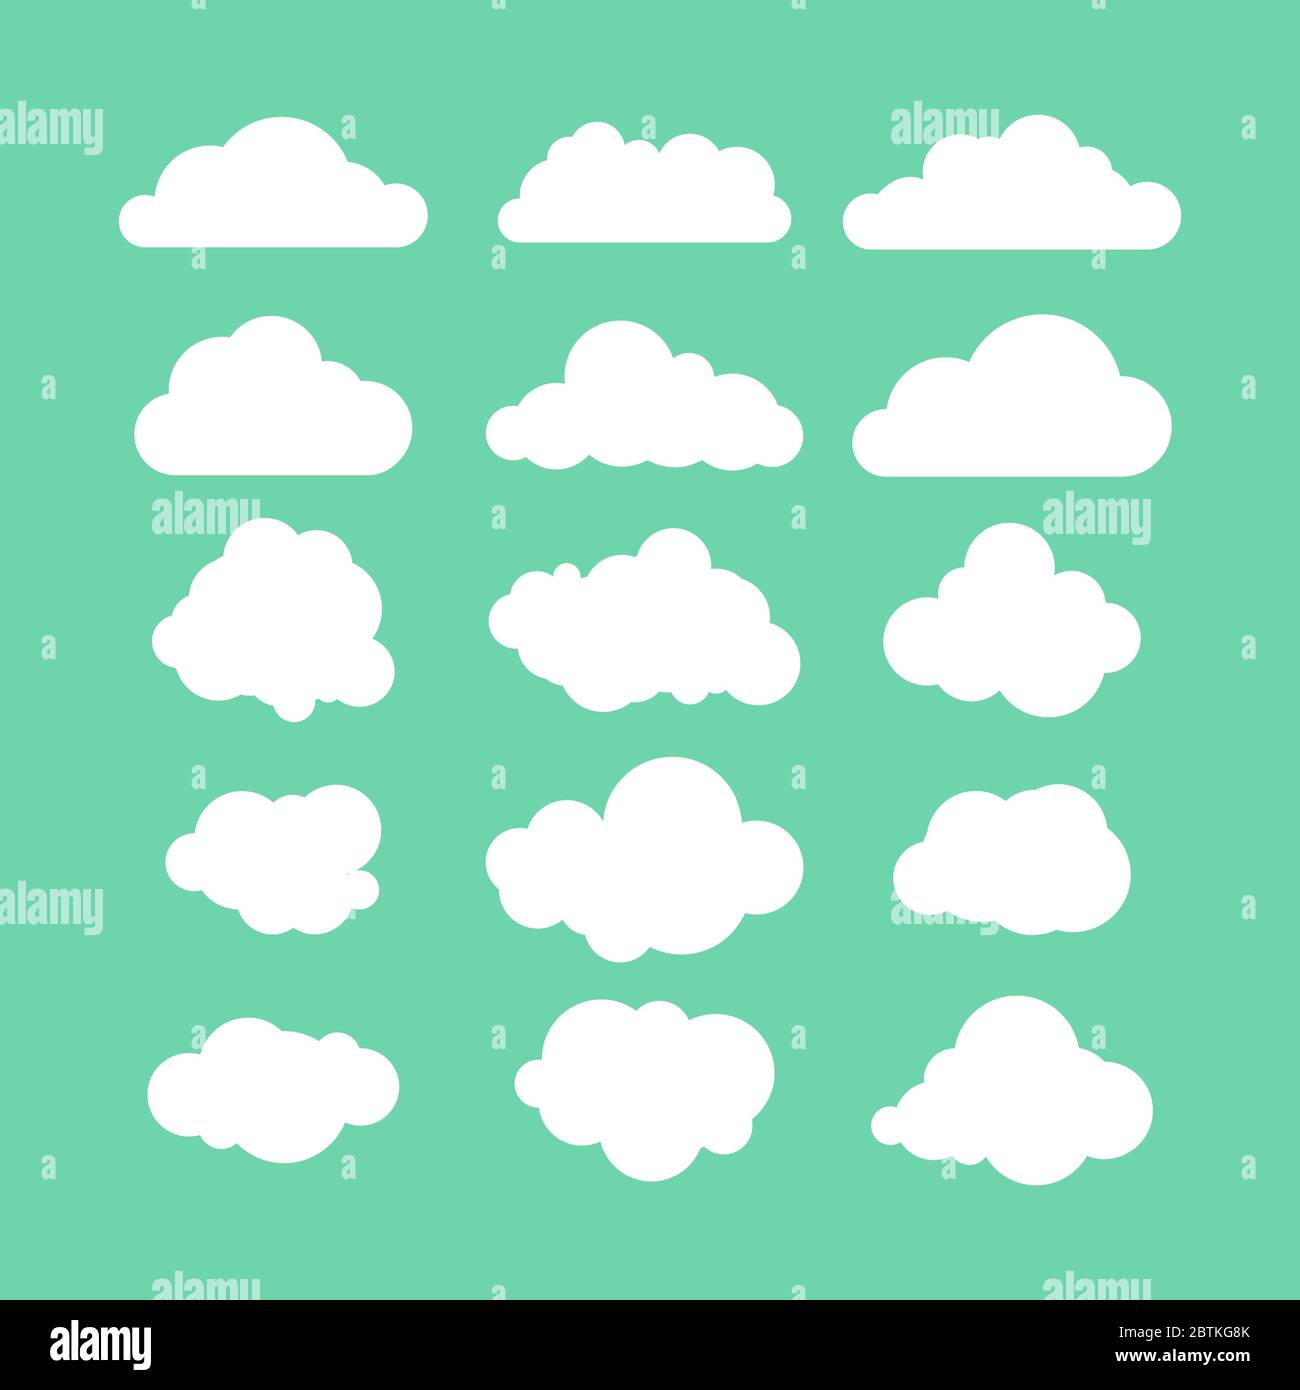 Stock Vektor Illustration Satz von flachen Wolken Symbol Stock Vektor